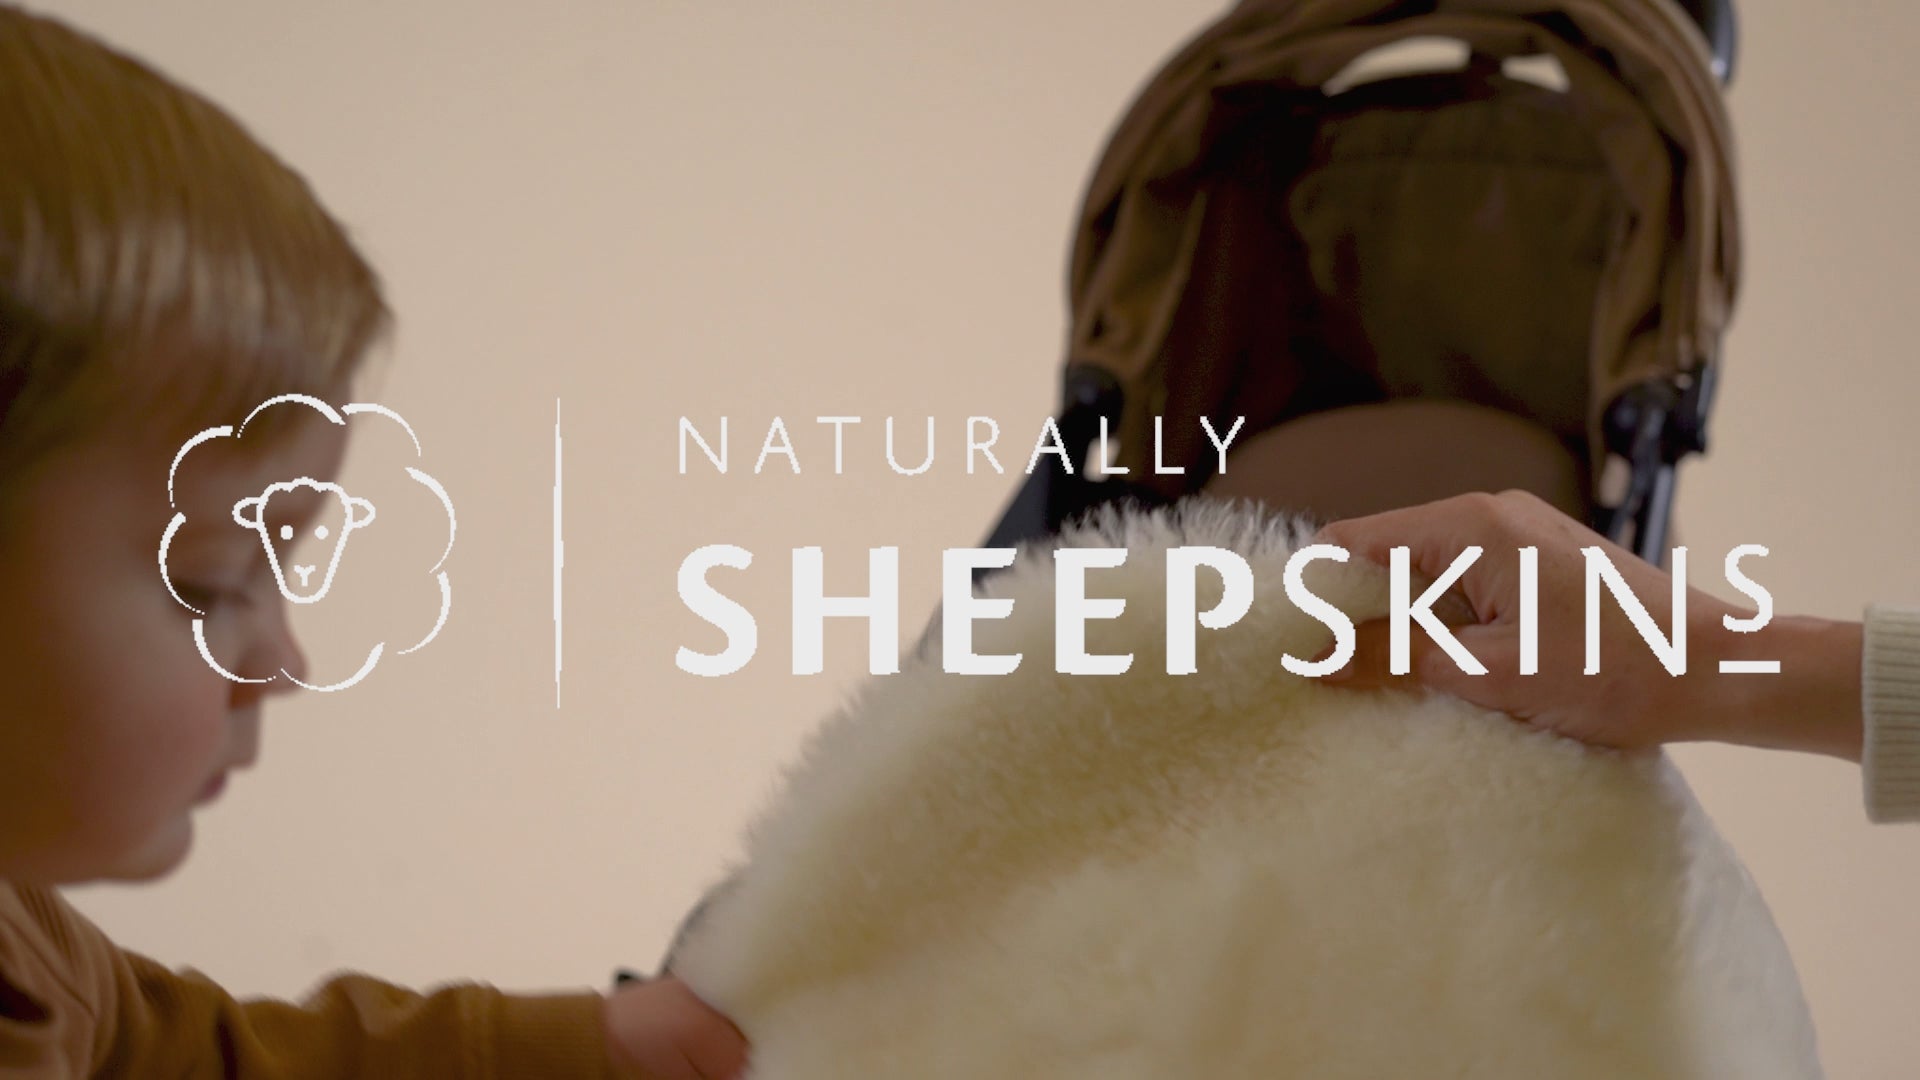 video how to use sheepskin snuggler pram liner